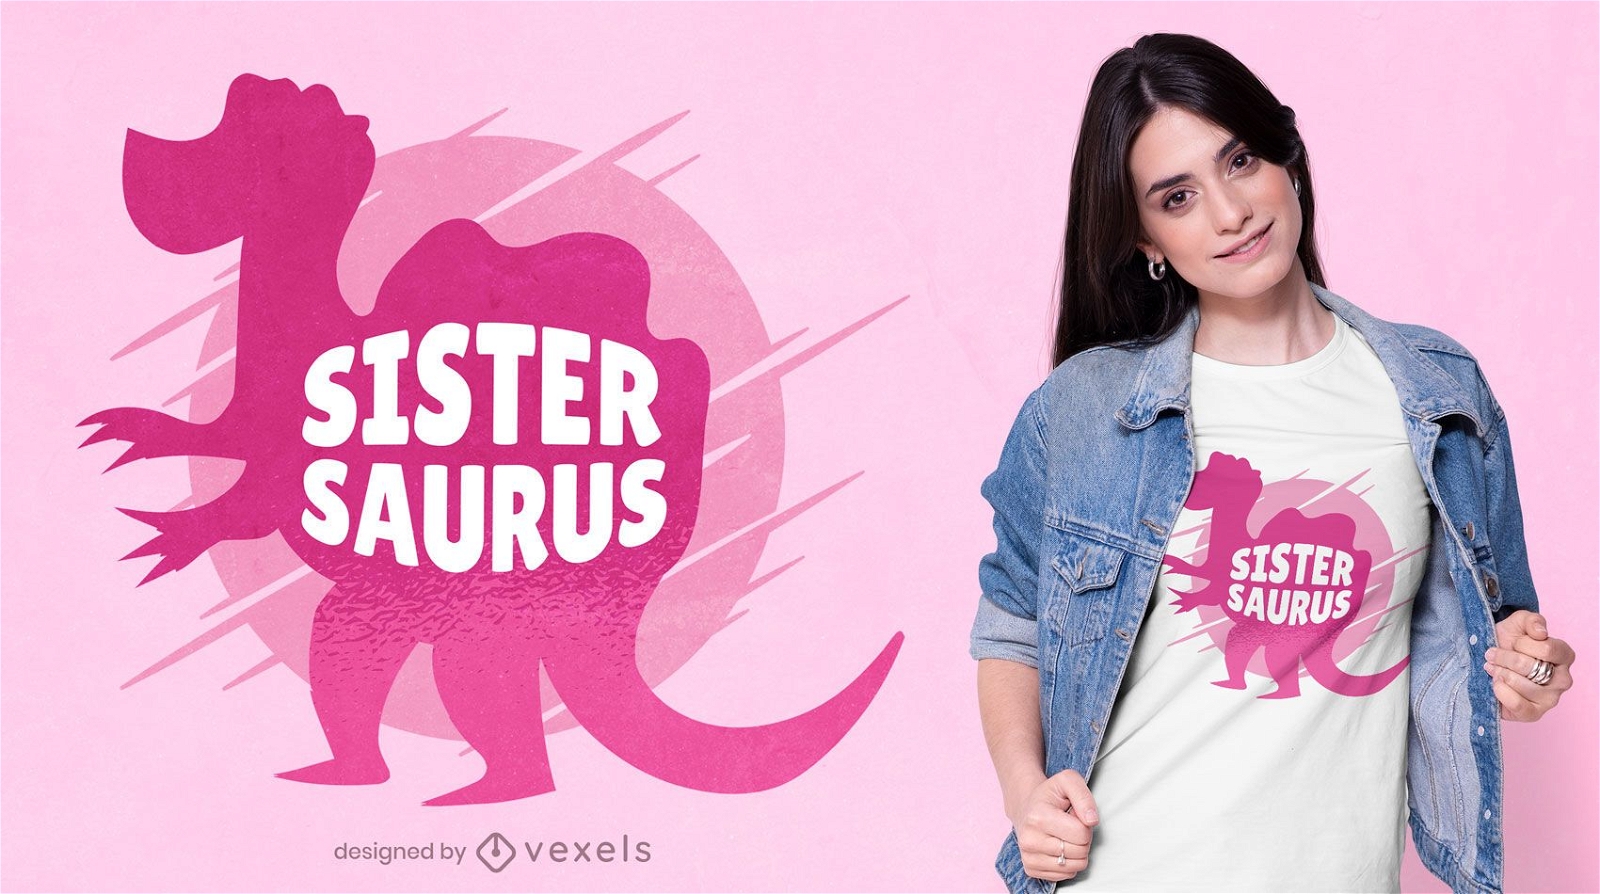 Sister saurus t-shirt design